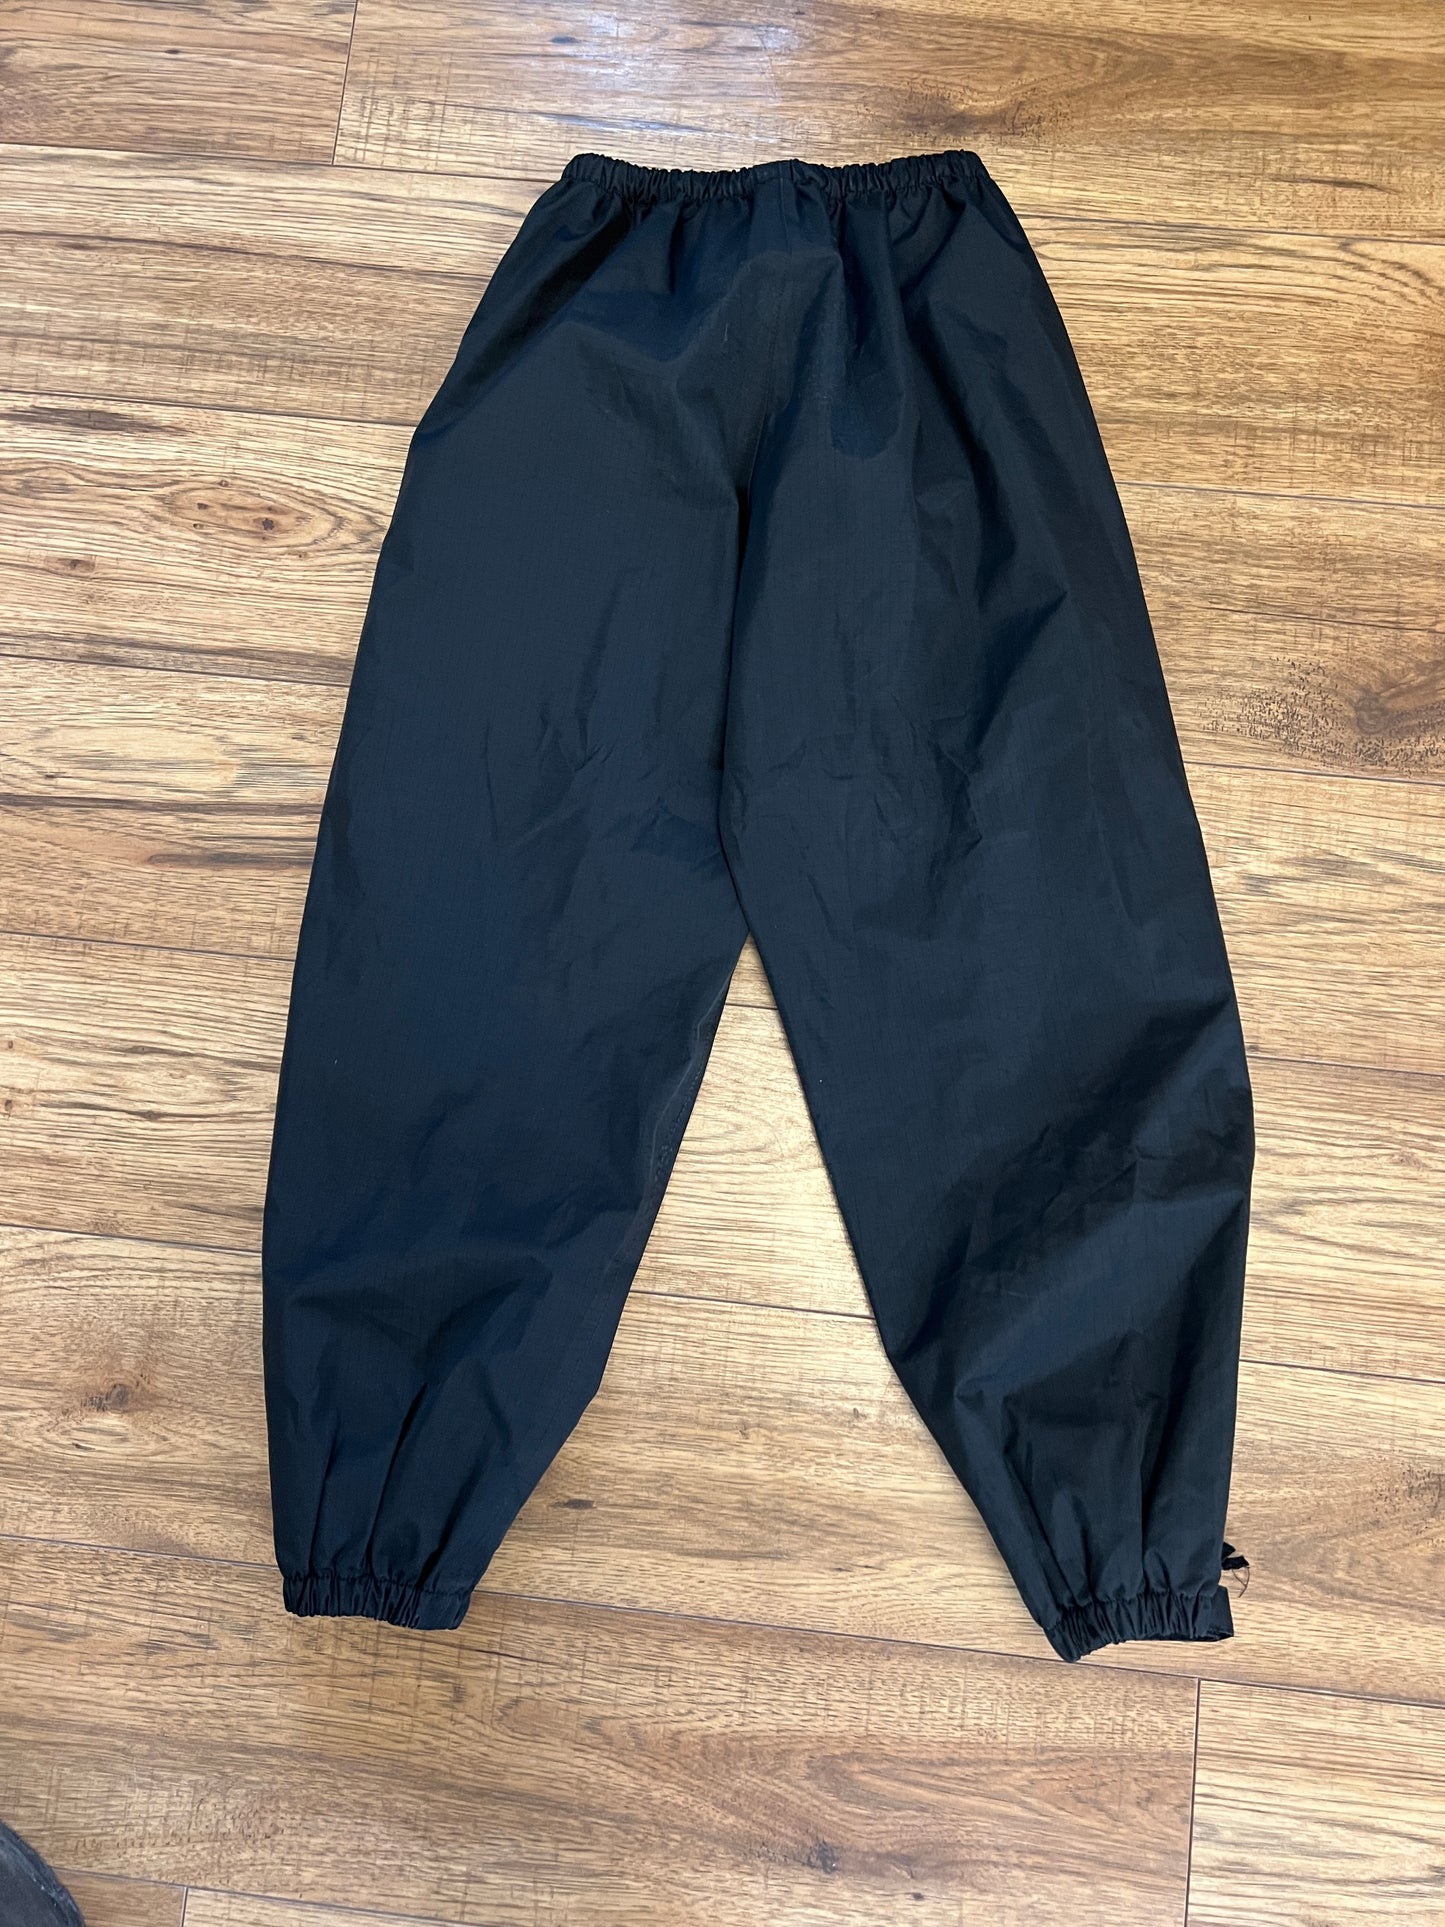 Rain Pants Child Size 8-10 Wetskins Black Waterproof Excellent